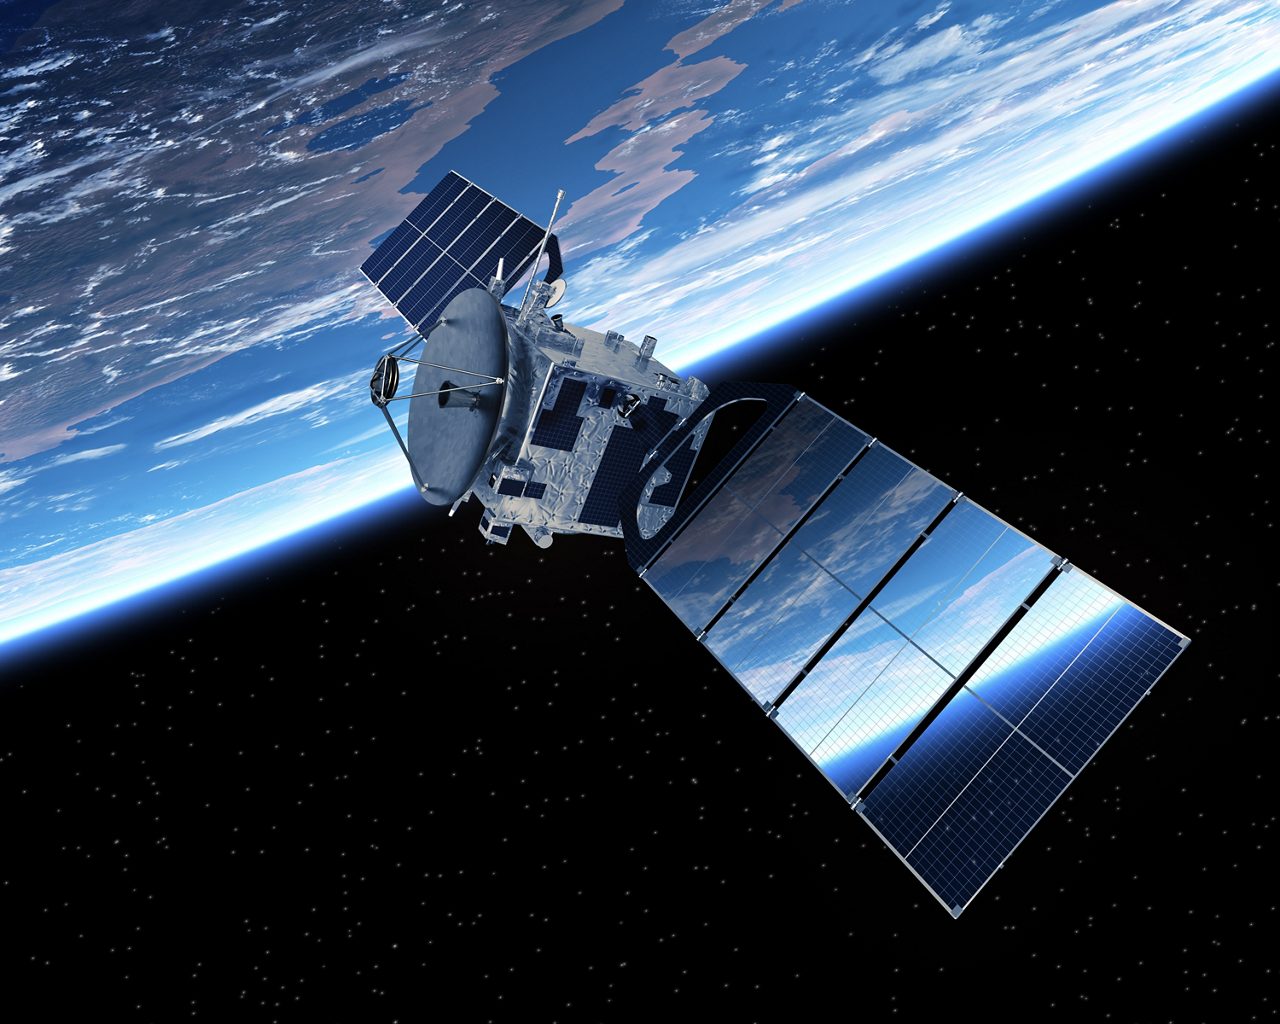 Planeta Tierra de la órbita satelital de la comunicación